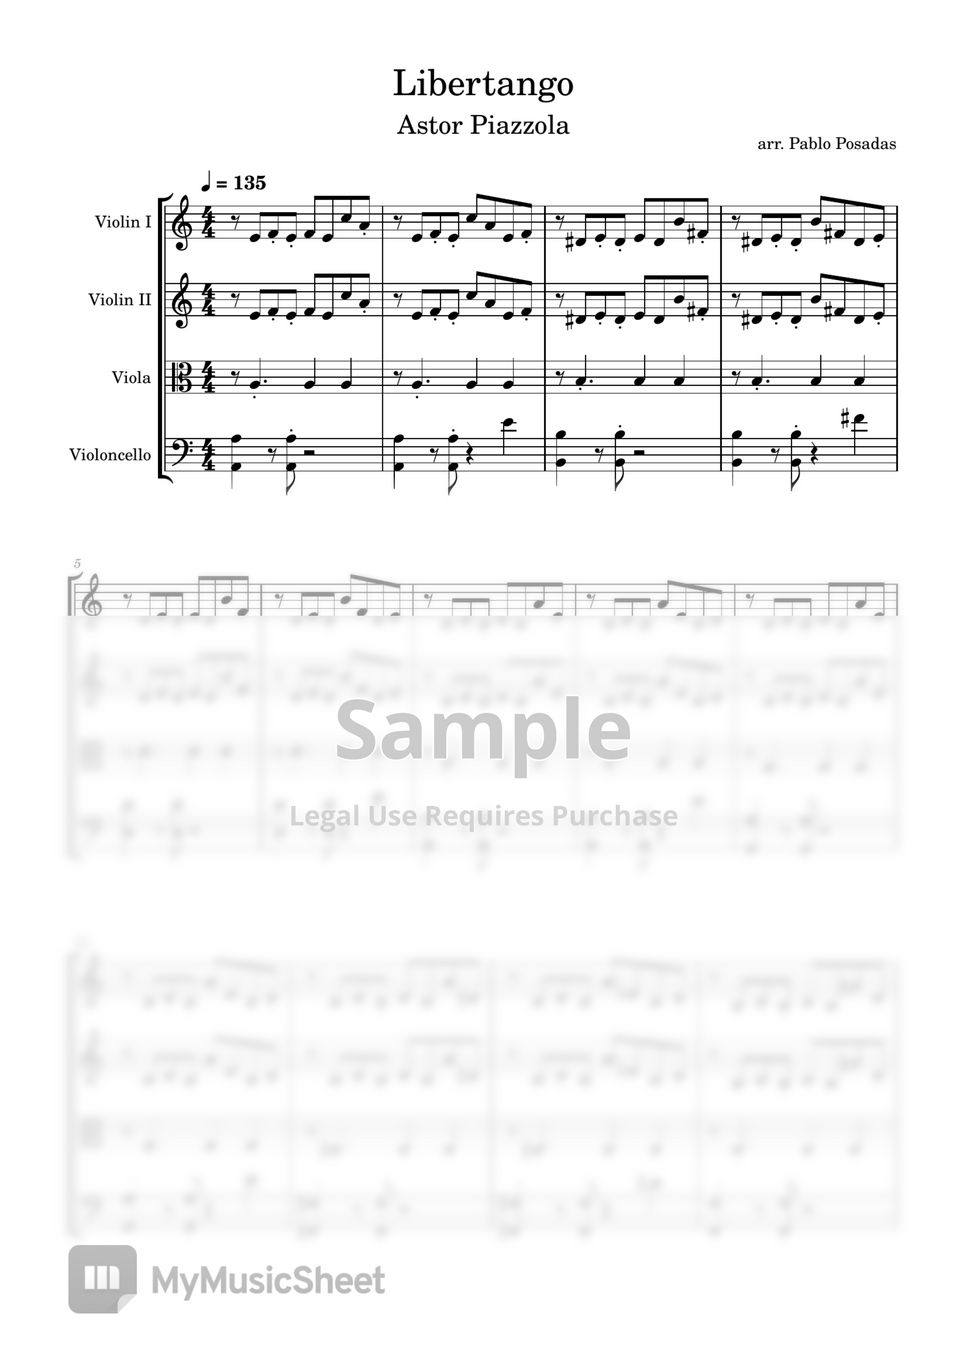 Astor Piazzola - Libertango (string quartet) by Thec P